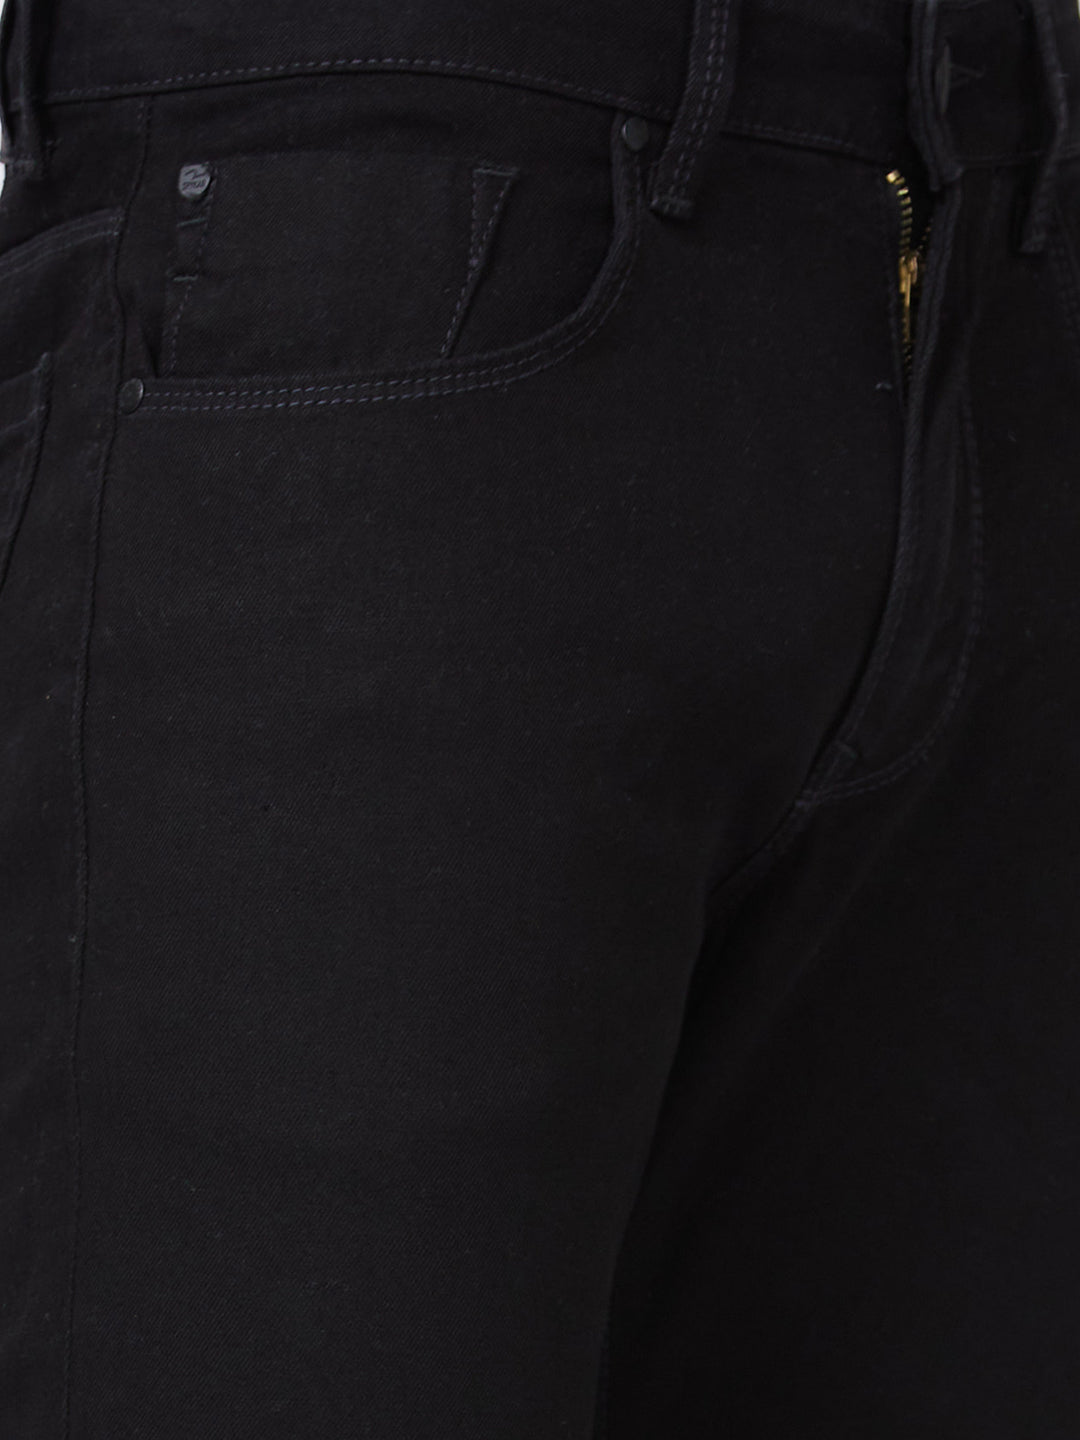 Spykar Mid Rise Comfort Fit Regular Length Black Jeans For Men